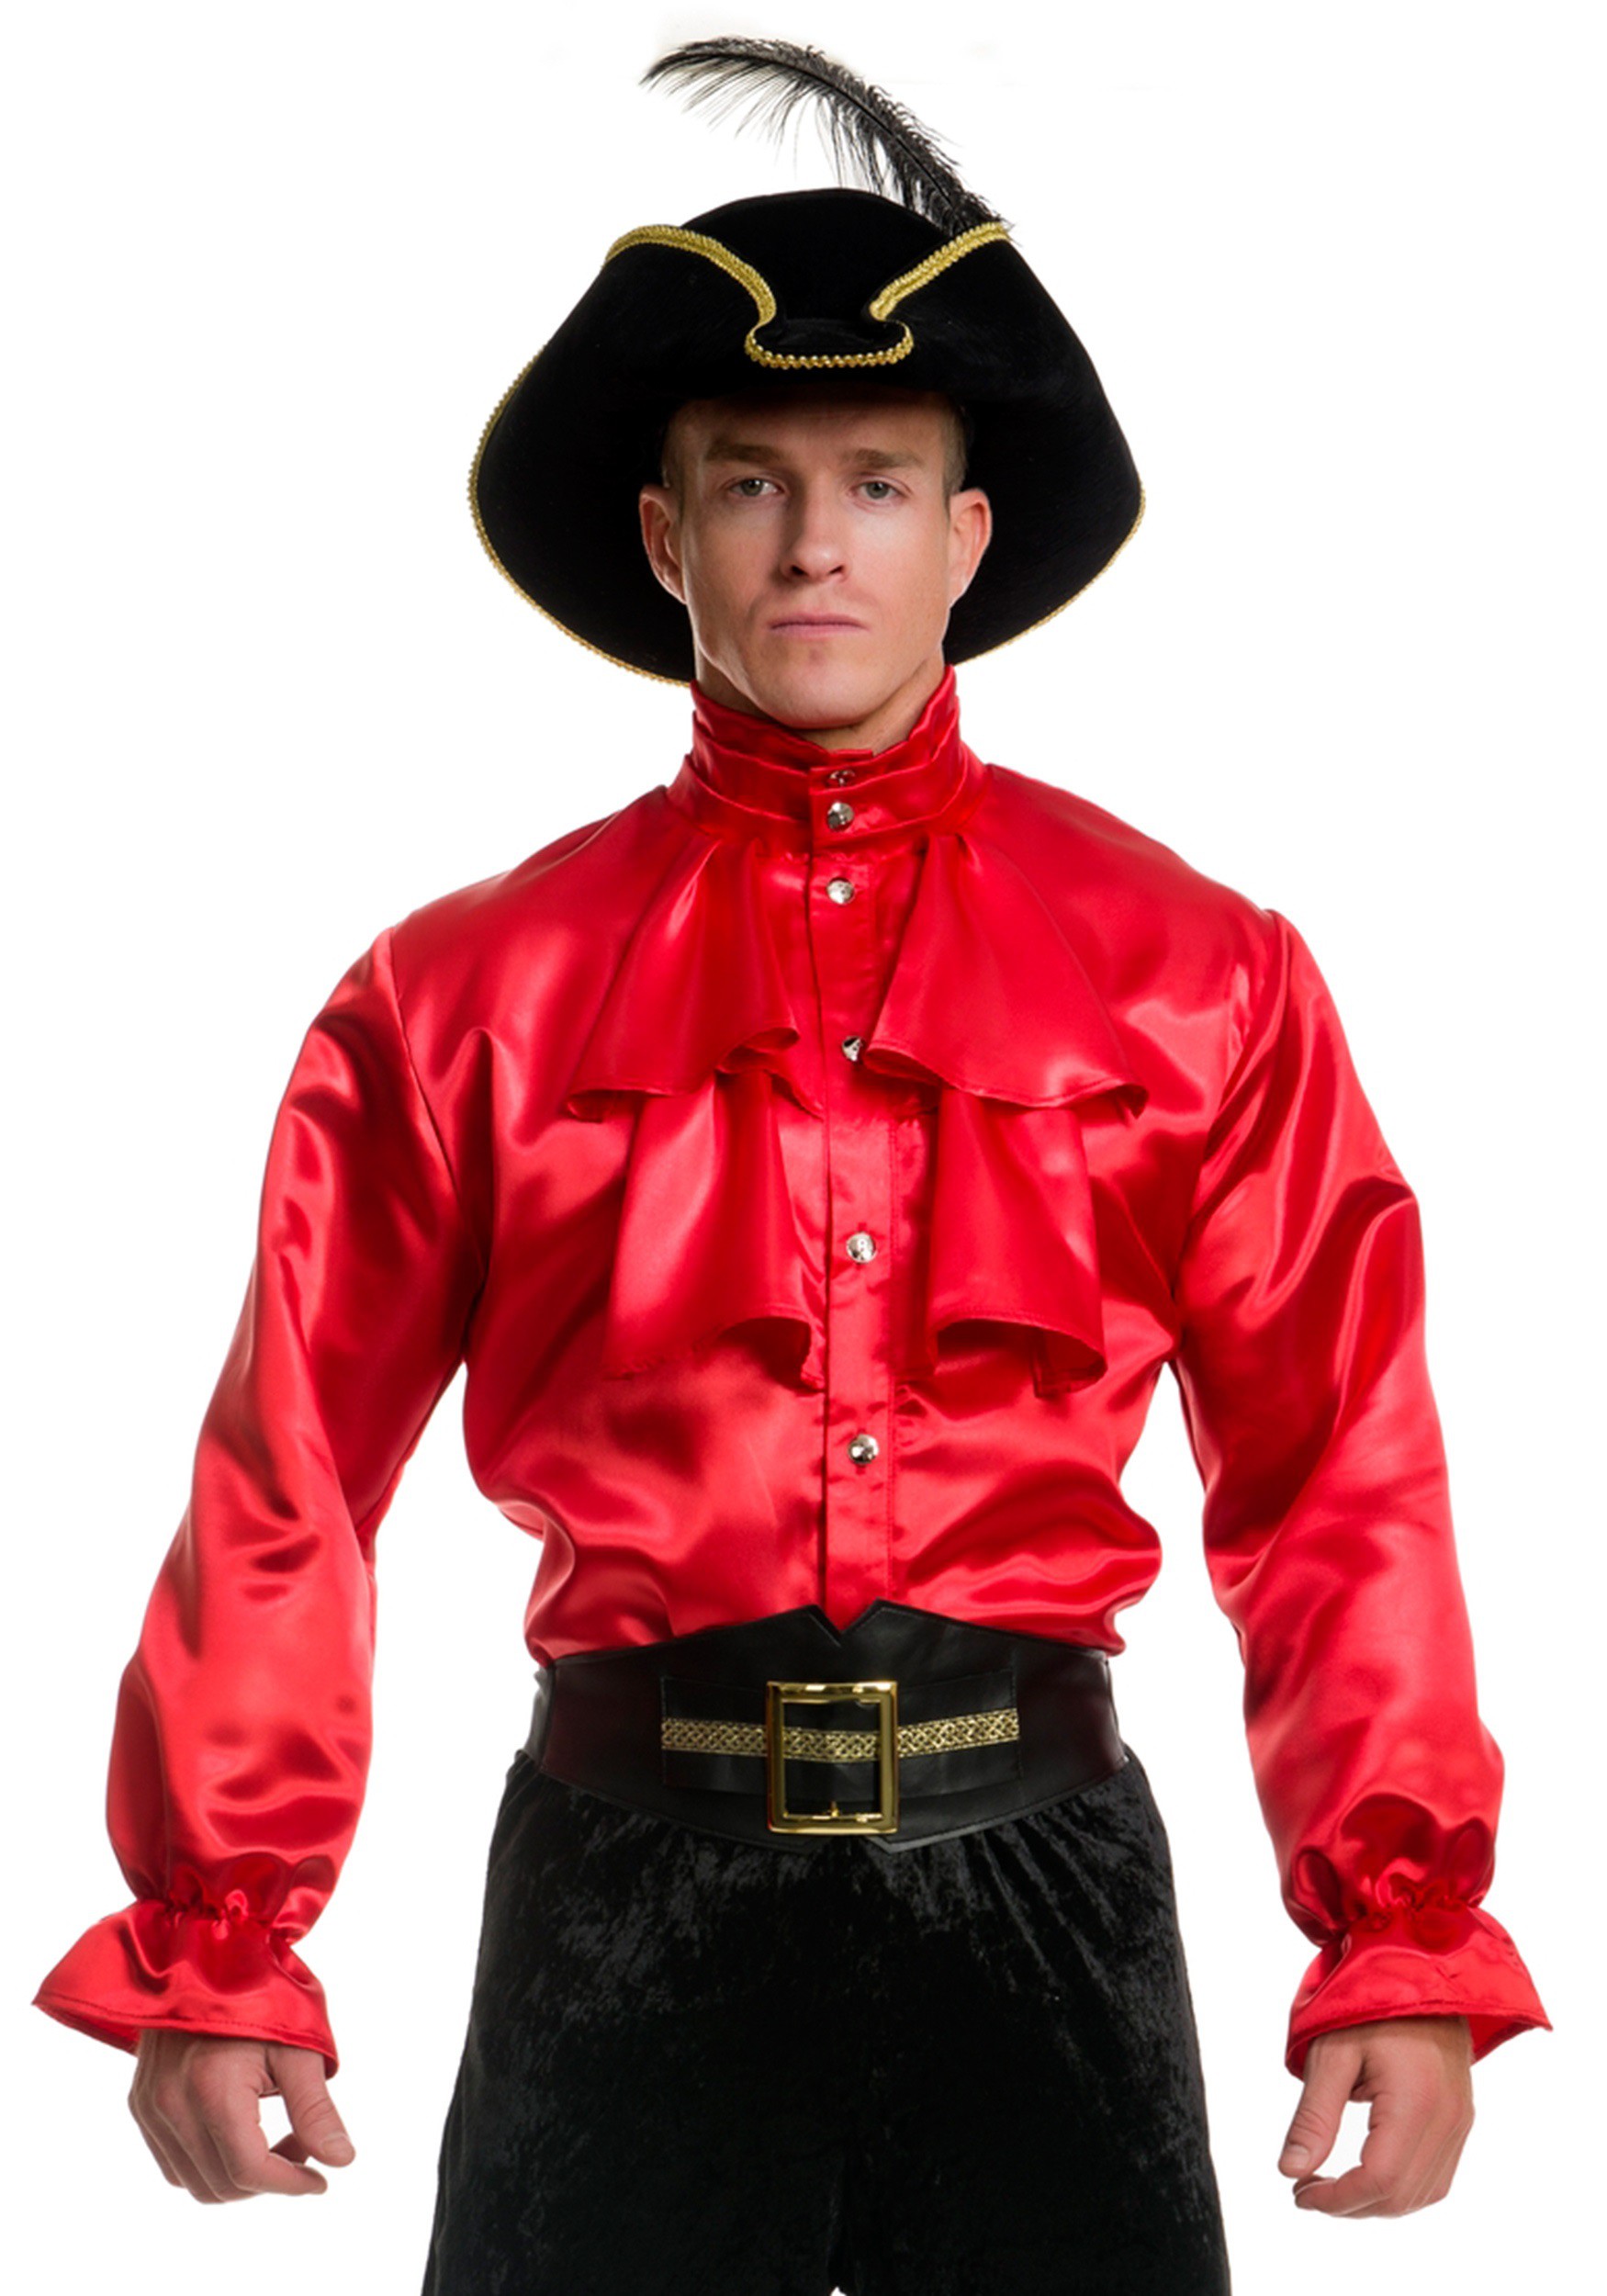 red silk button down shirt mens